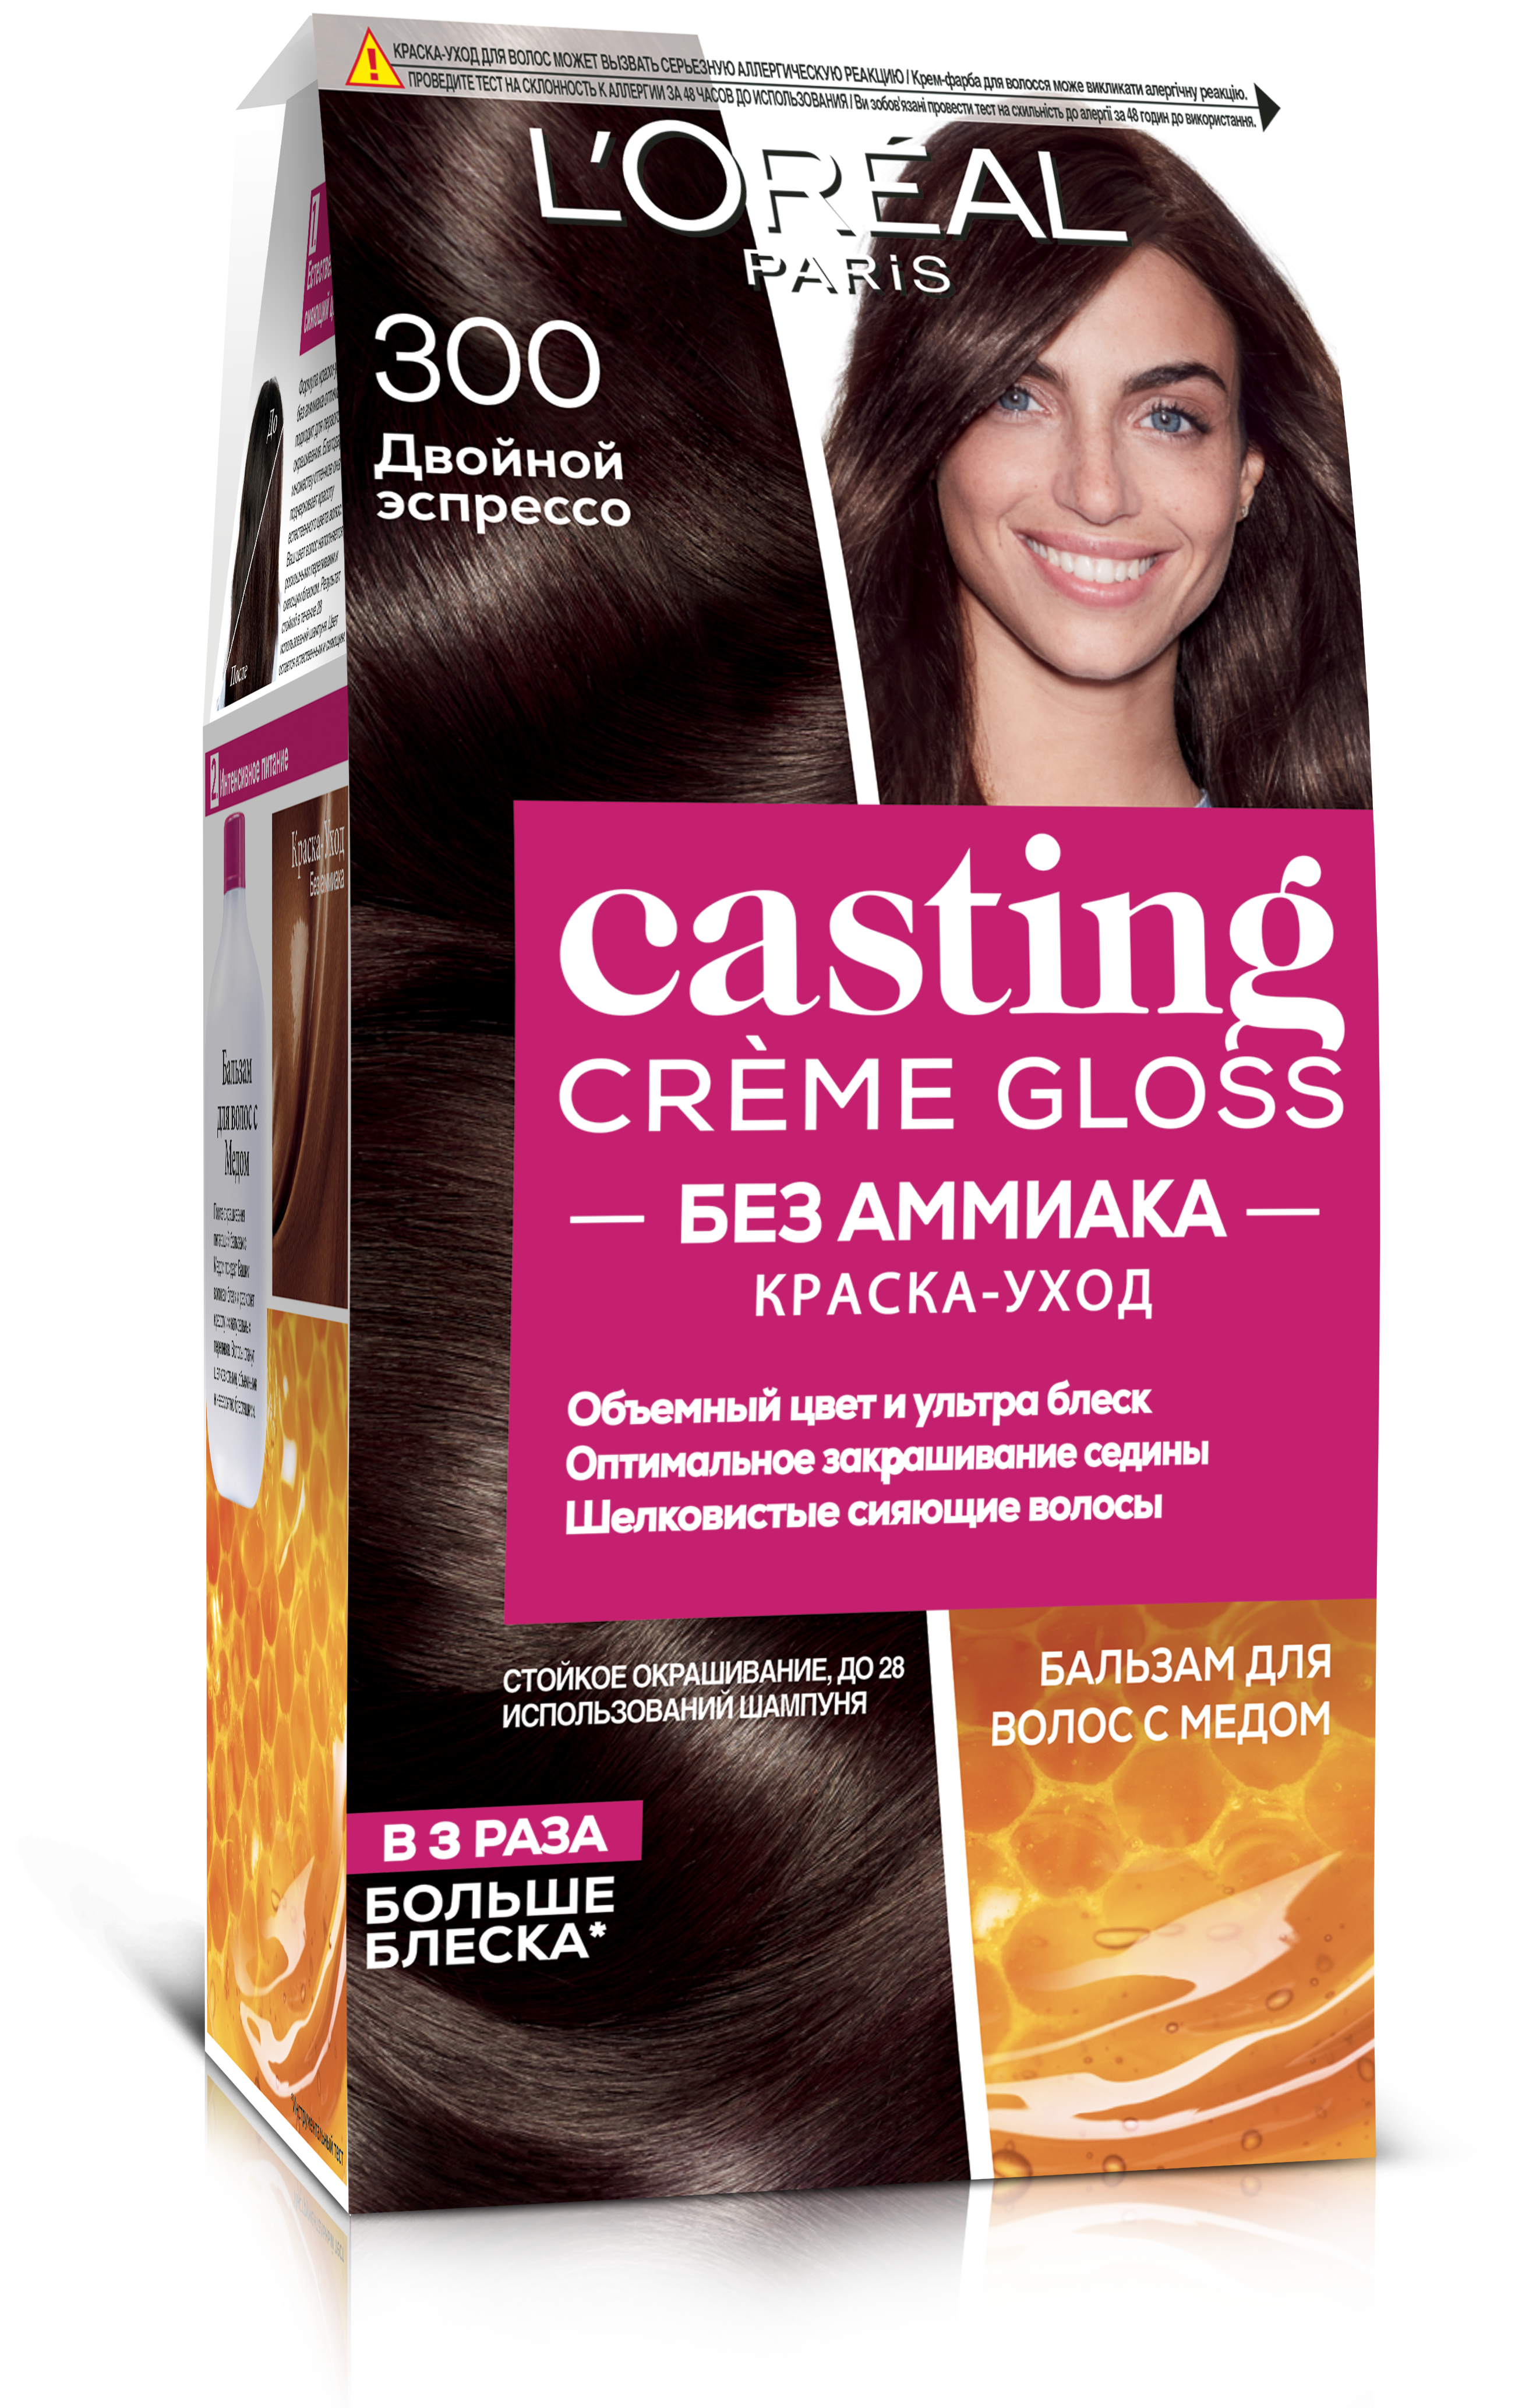 Краска-уход для волос без аммиака L'Oreal Paris Casting Creme Gloss, тон 300 (Двойной эспрессо), 120 мл (A8943976) - фото 1